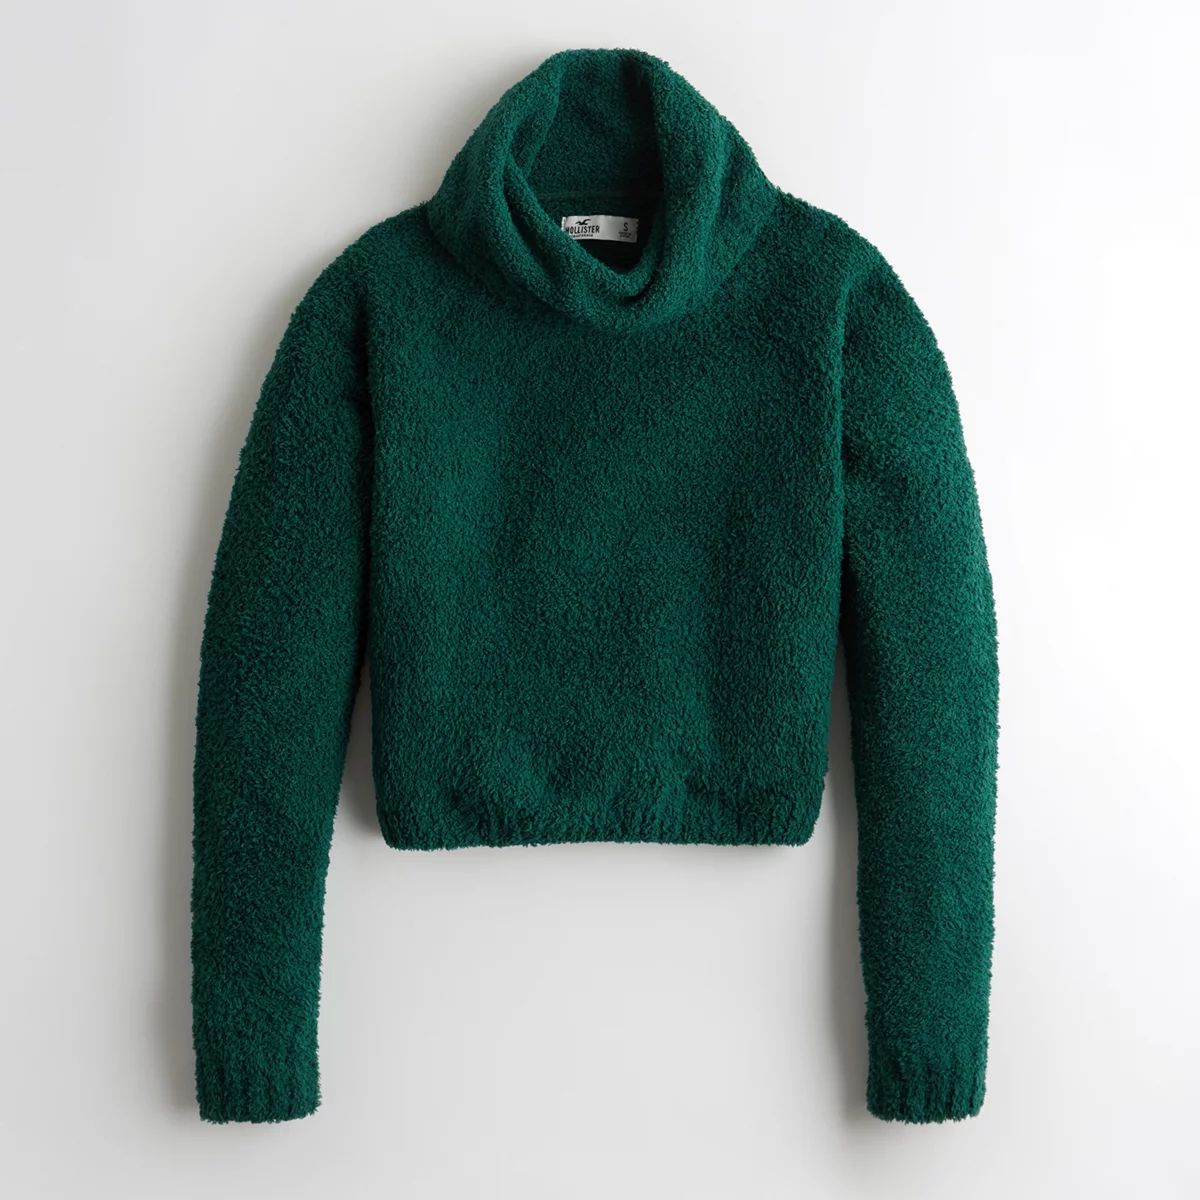 Girls Fuzzy Crop Turtleneck Sweater from Hollister | Hollister US